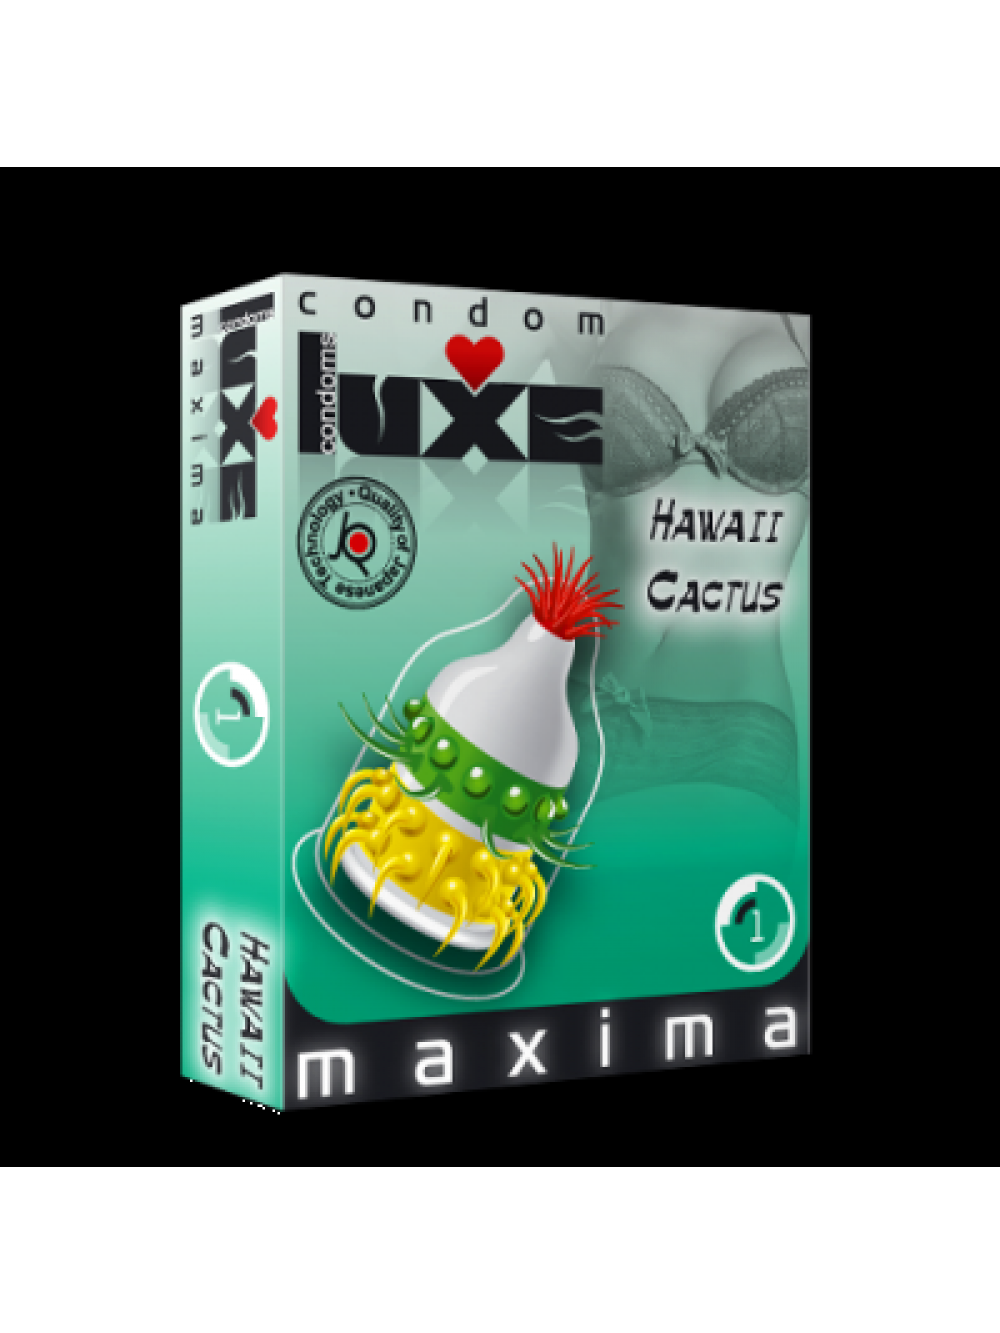 Luxe Condom Hawaii Cactus  6934439713344